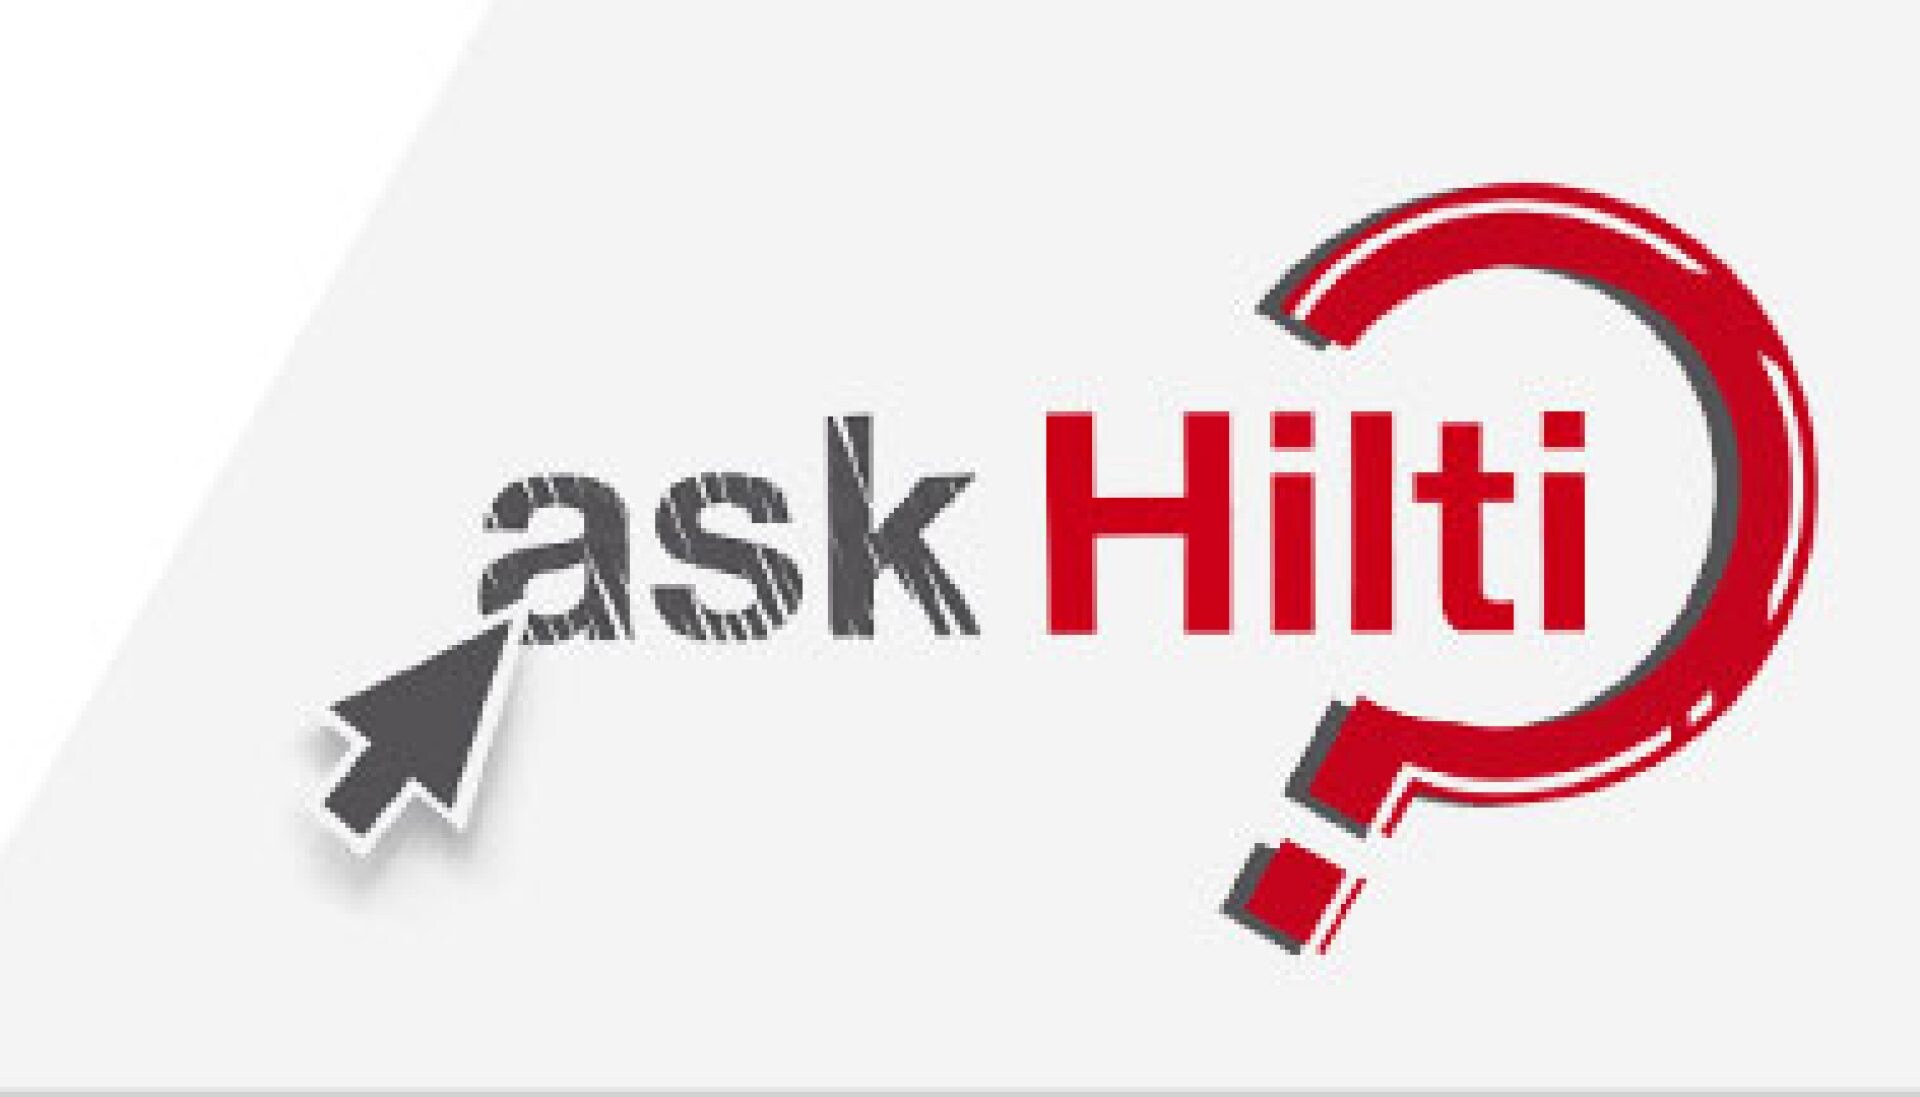 Ask Hilti